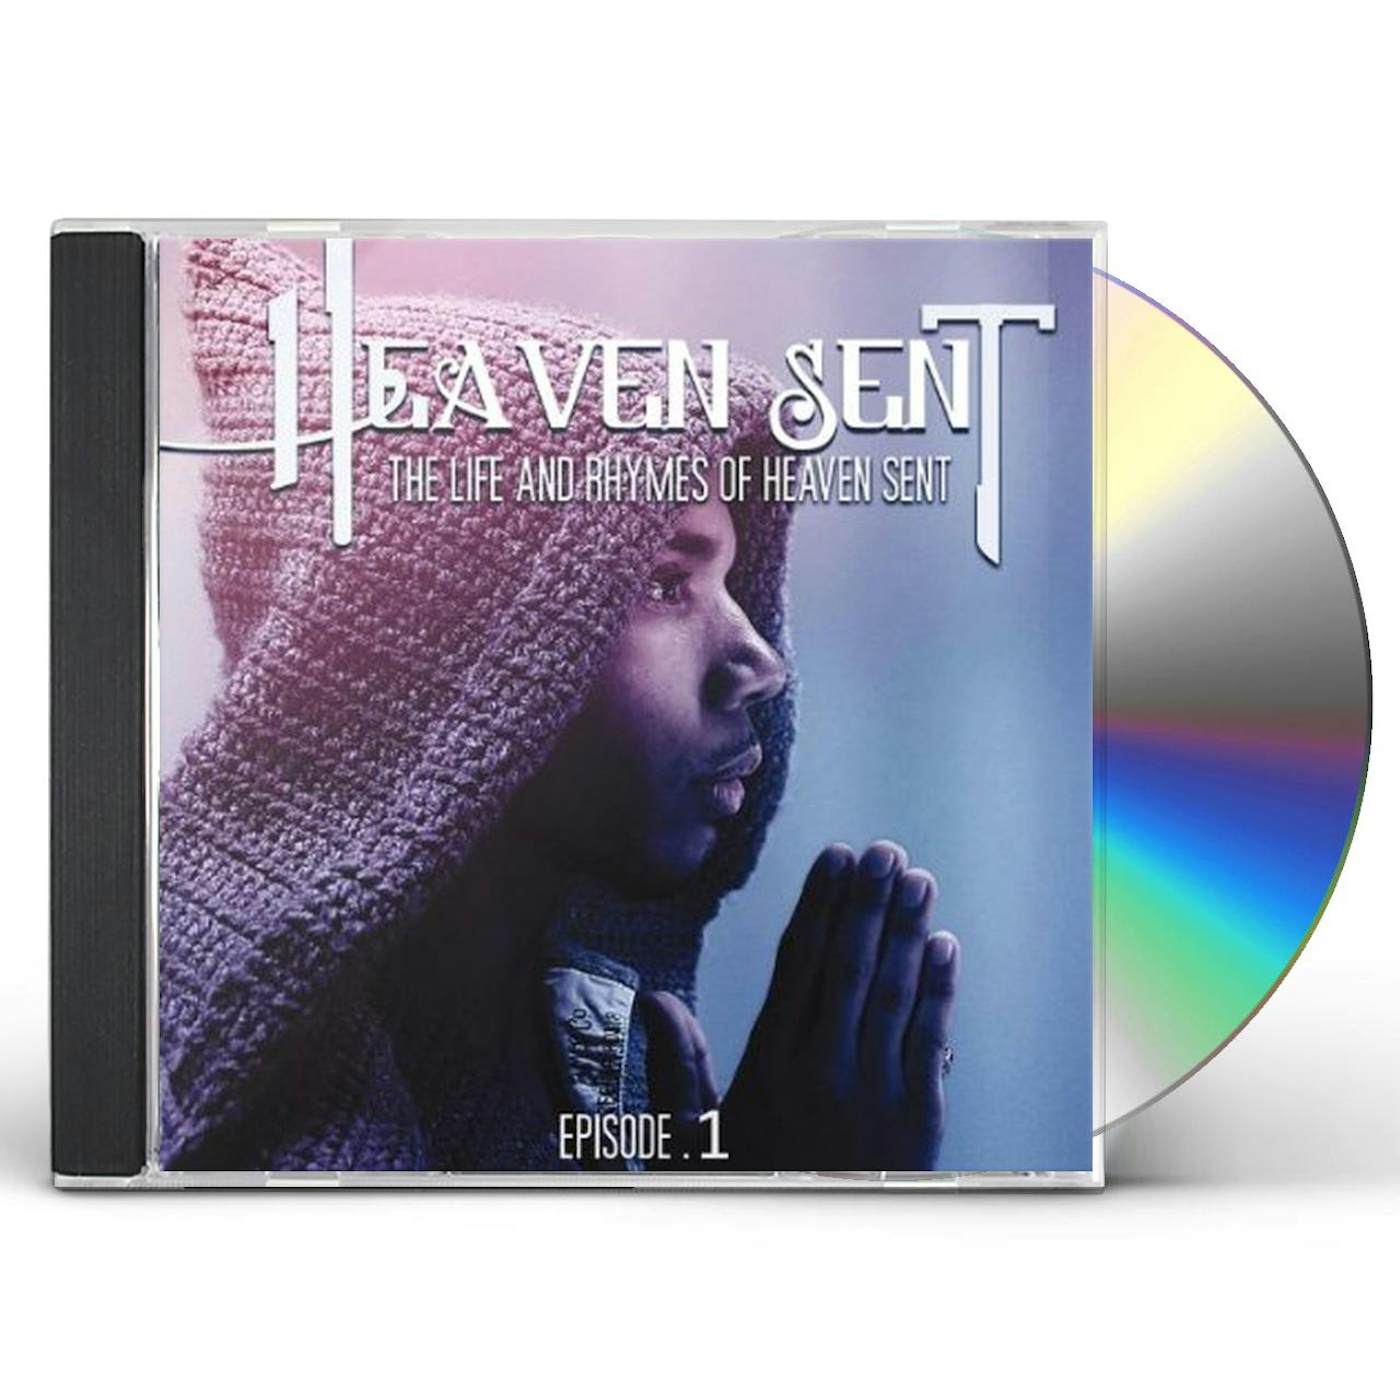 LIFE & RHYMES OF HEAVEN SENT EPISODE 1 CD